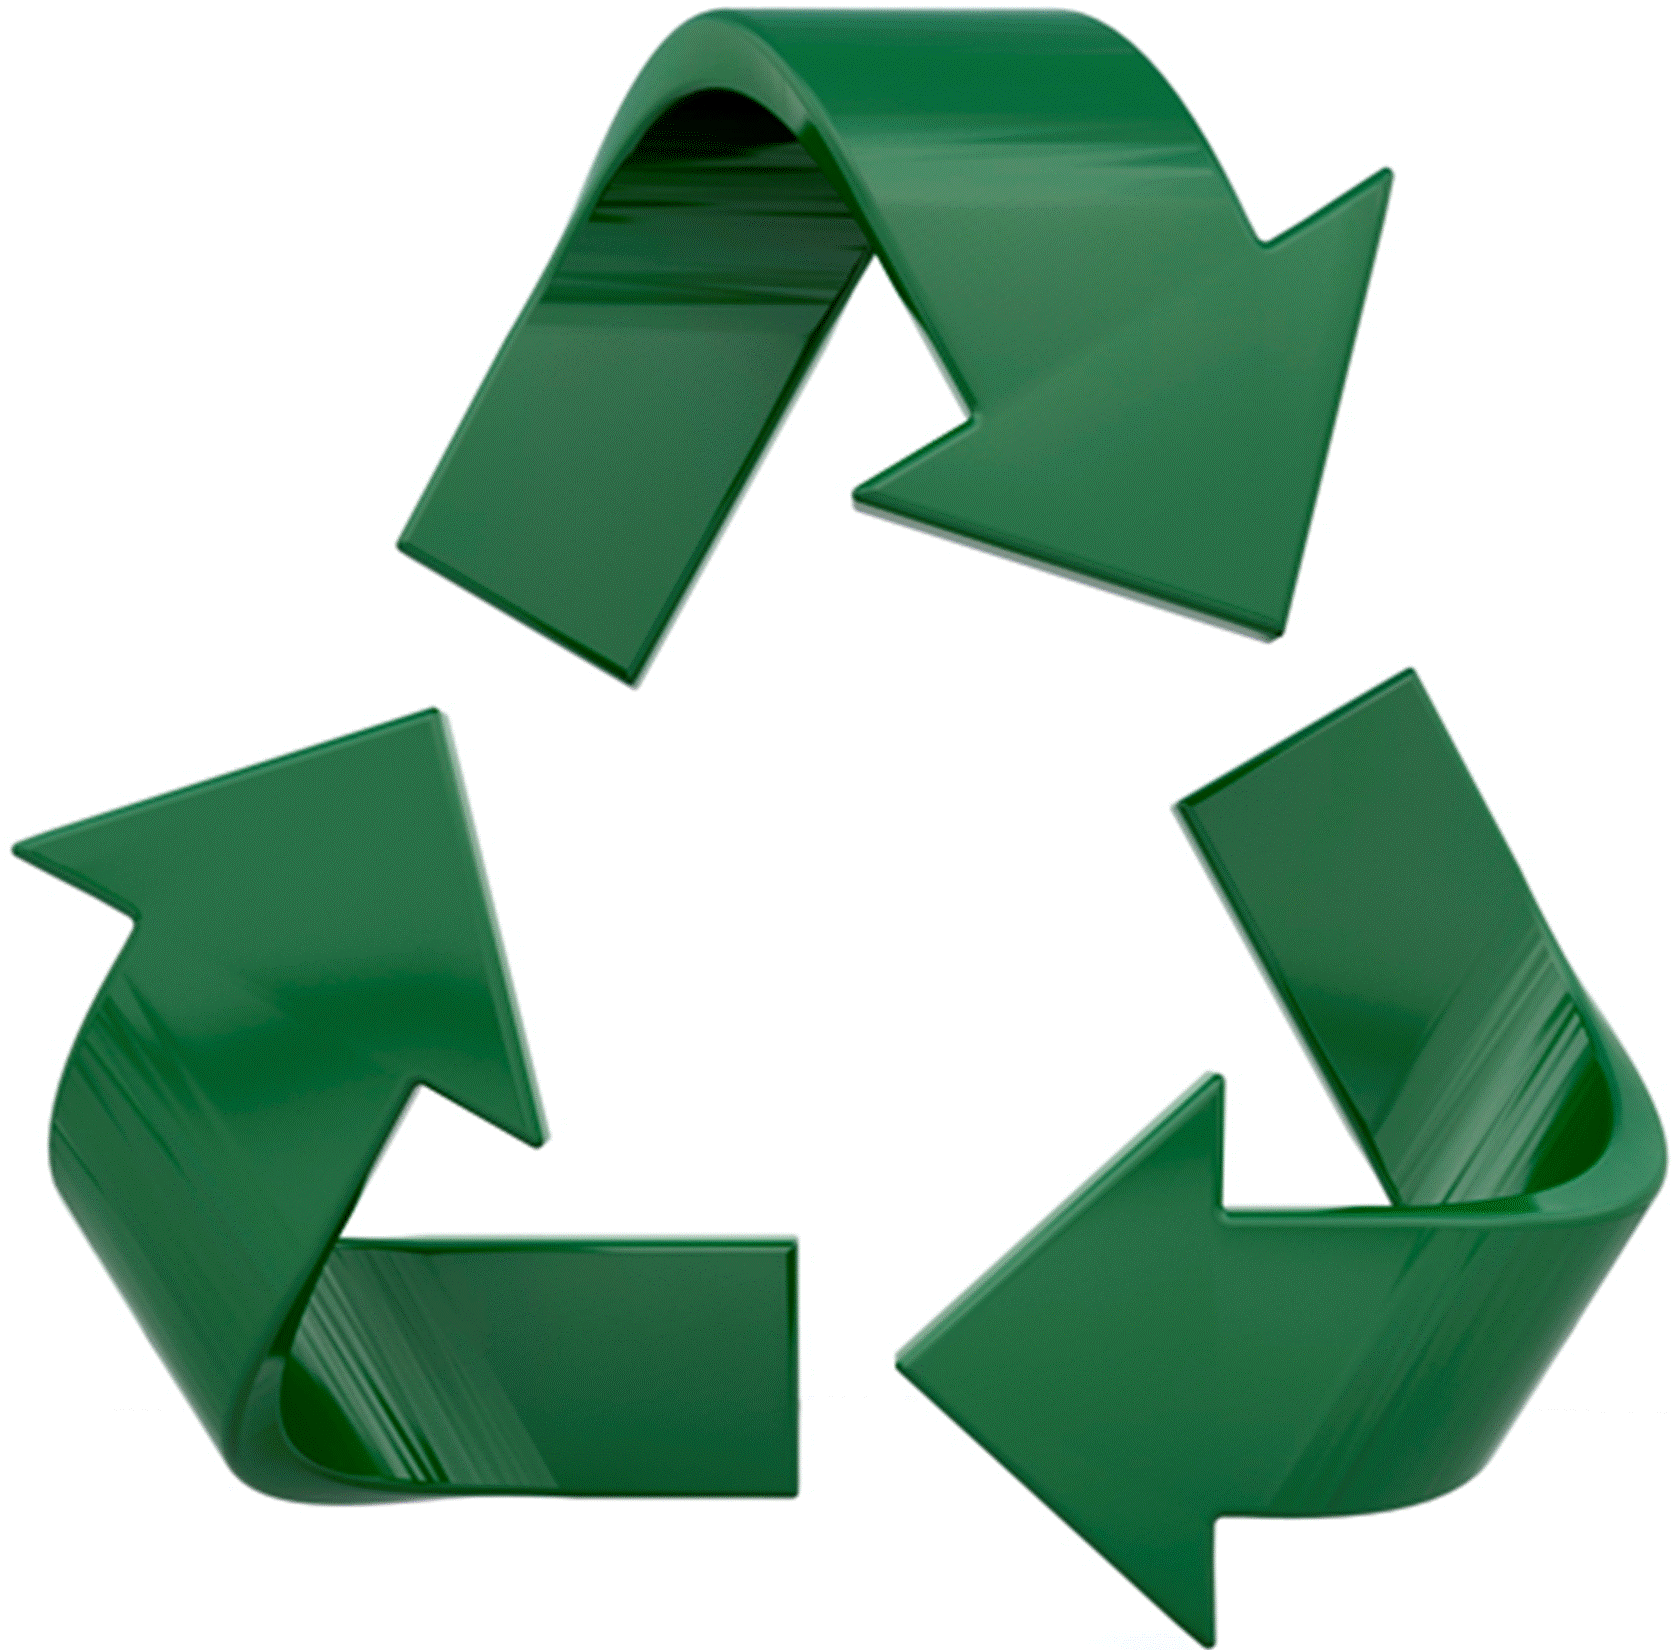 recycling logo clip art free - photo #40